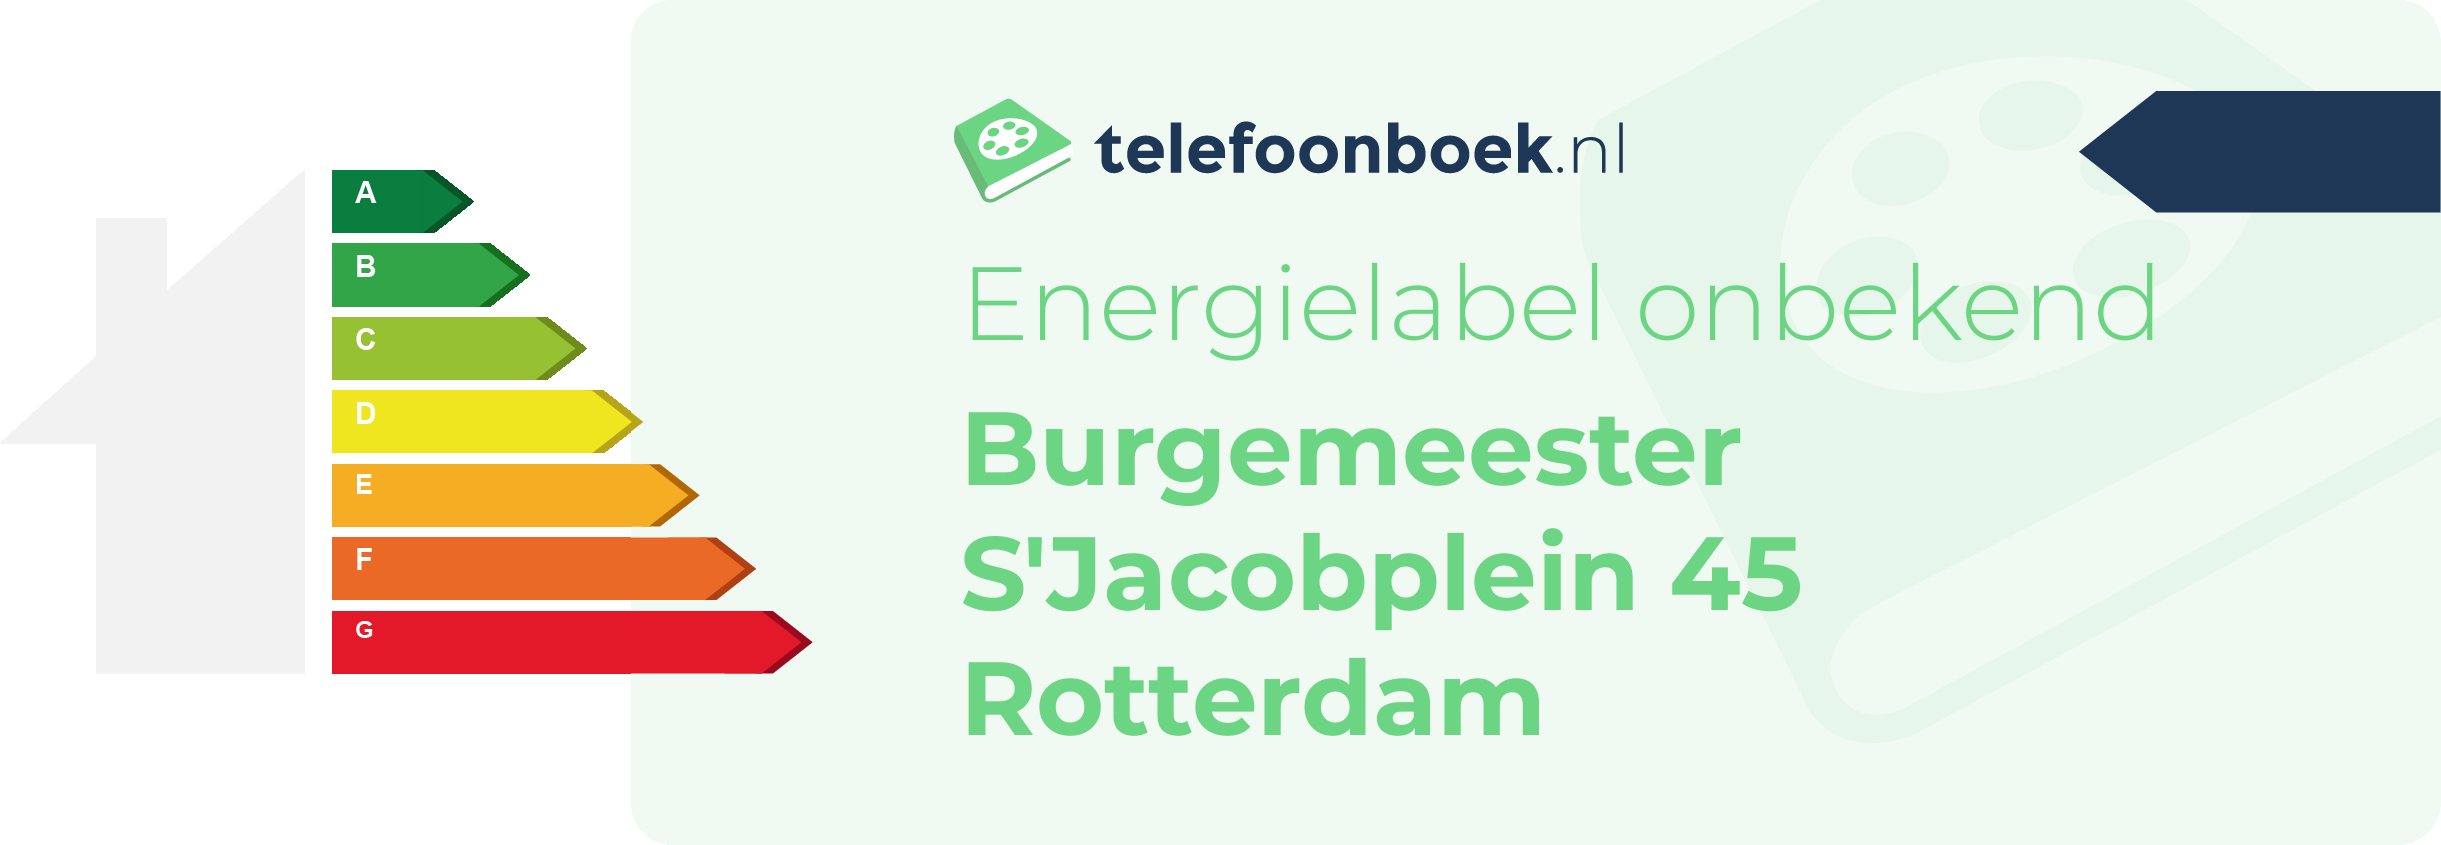 Energielabel Burgemeester S'Jacobplein 45 Rotterdam